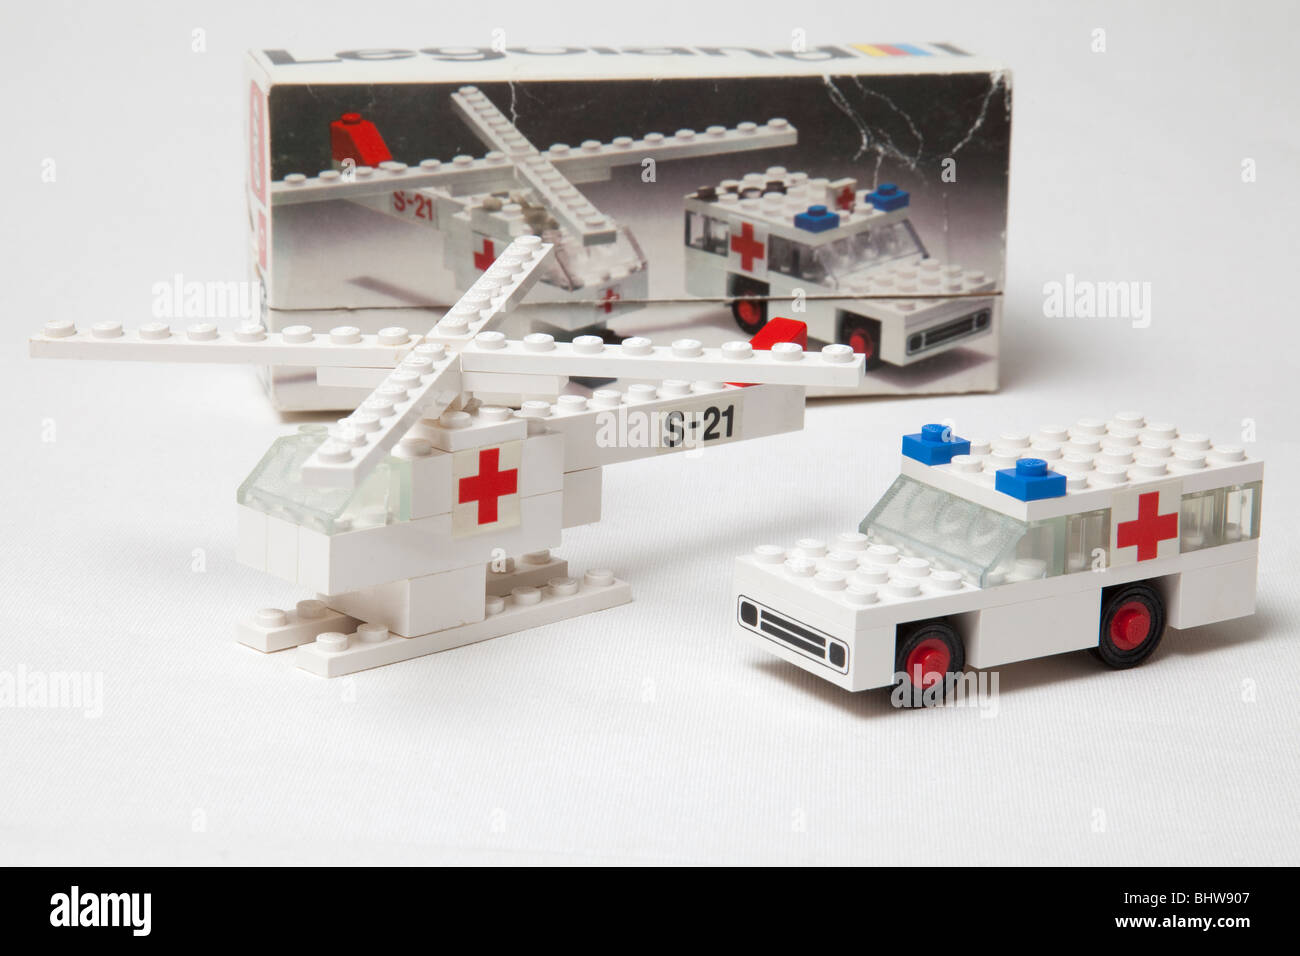 Old lego toy set rescue helicopter and ambulance Stock Photo - Alamy